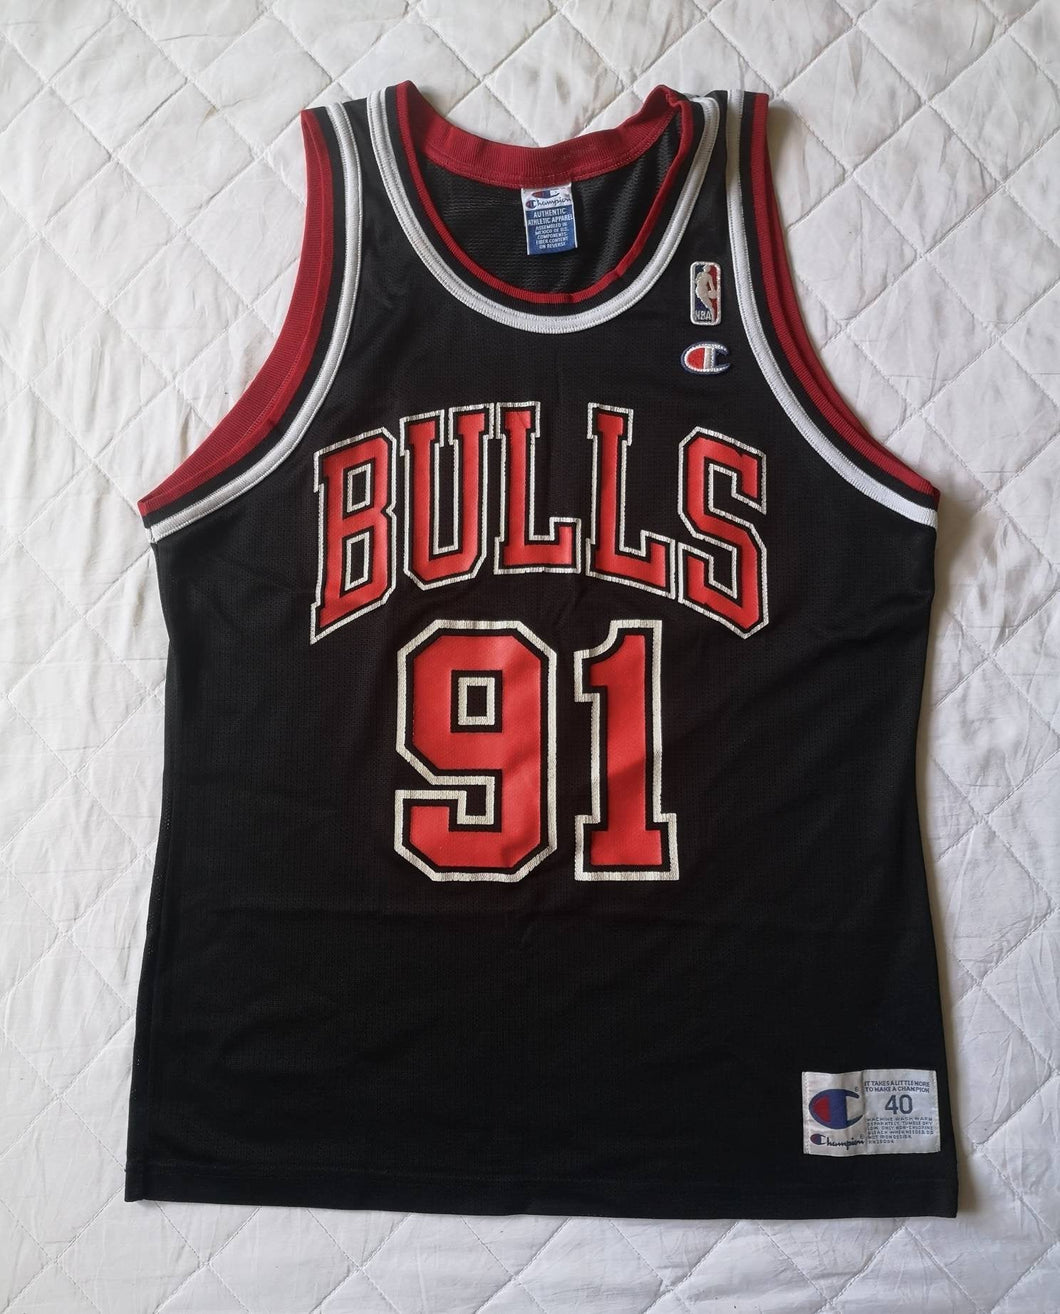 Authentic jersey Dennis Rodman Chicago Bulls NBA Champion Vintage